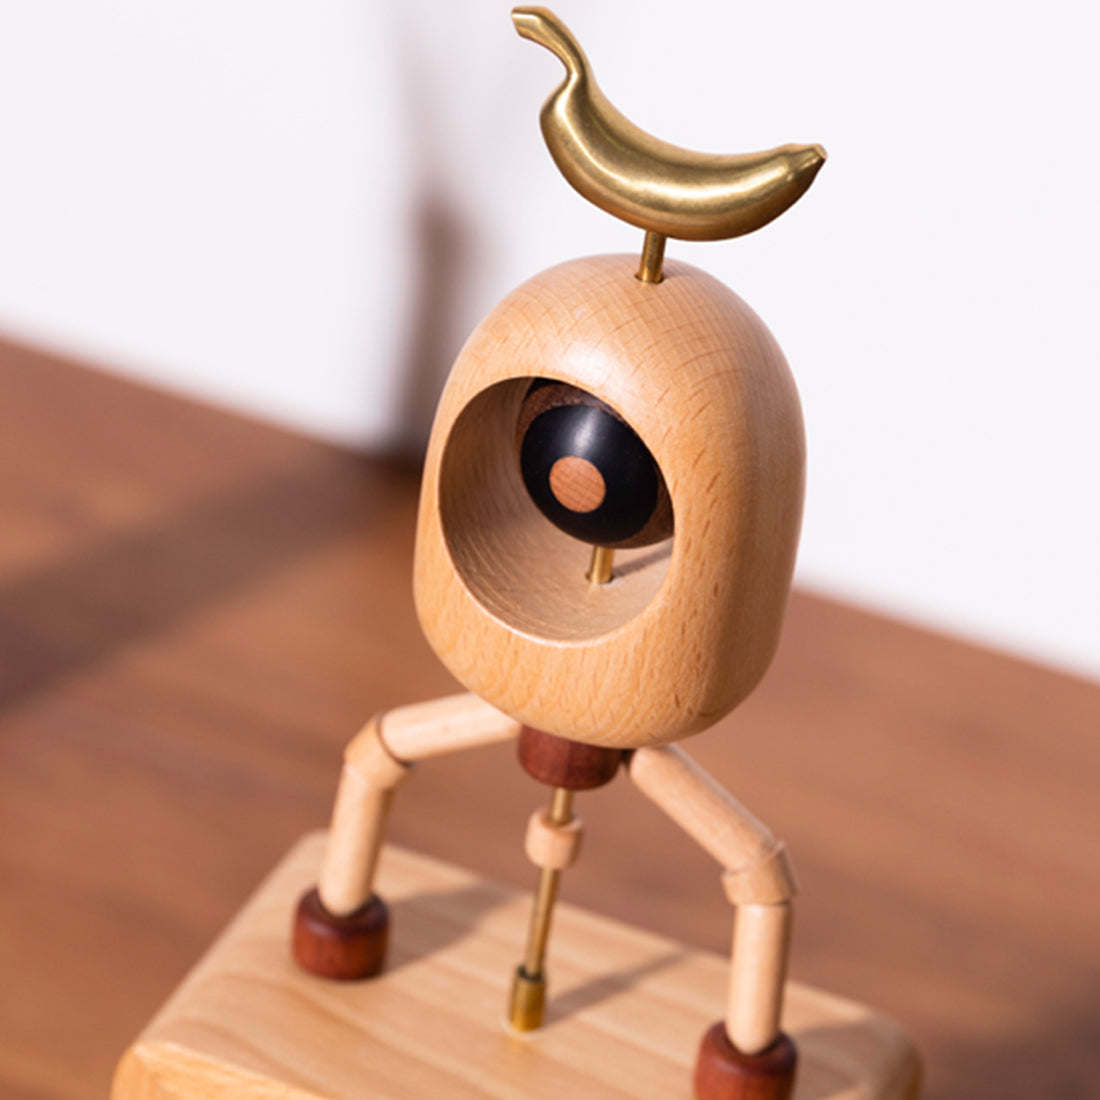 Automata Creative Cartoon Banana One Eye Monster Music Box Wooden Hand Cranked Musical Box